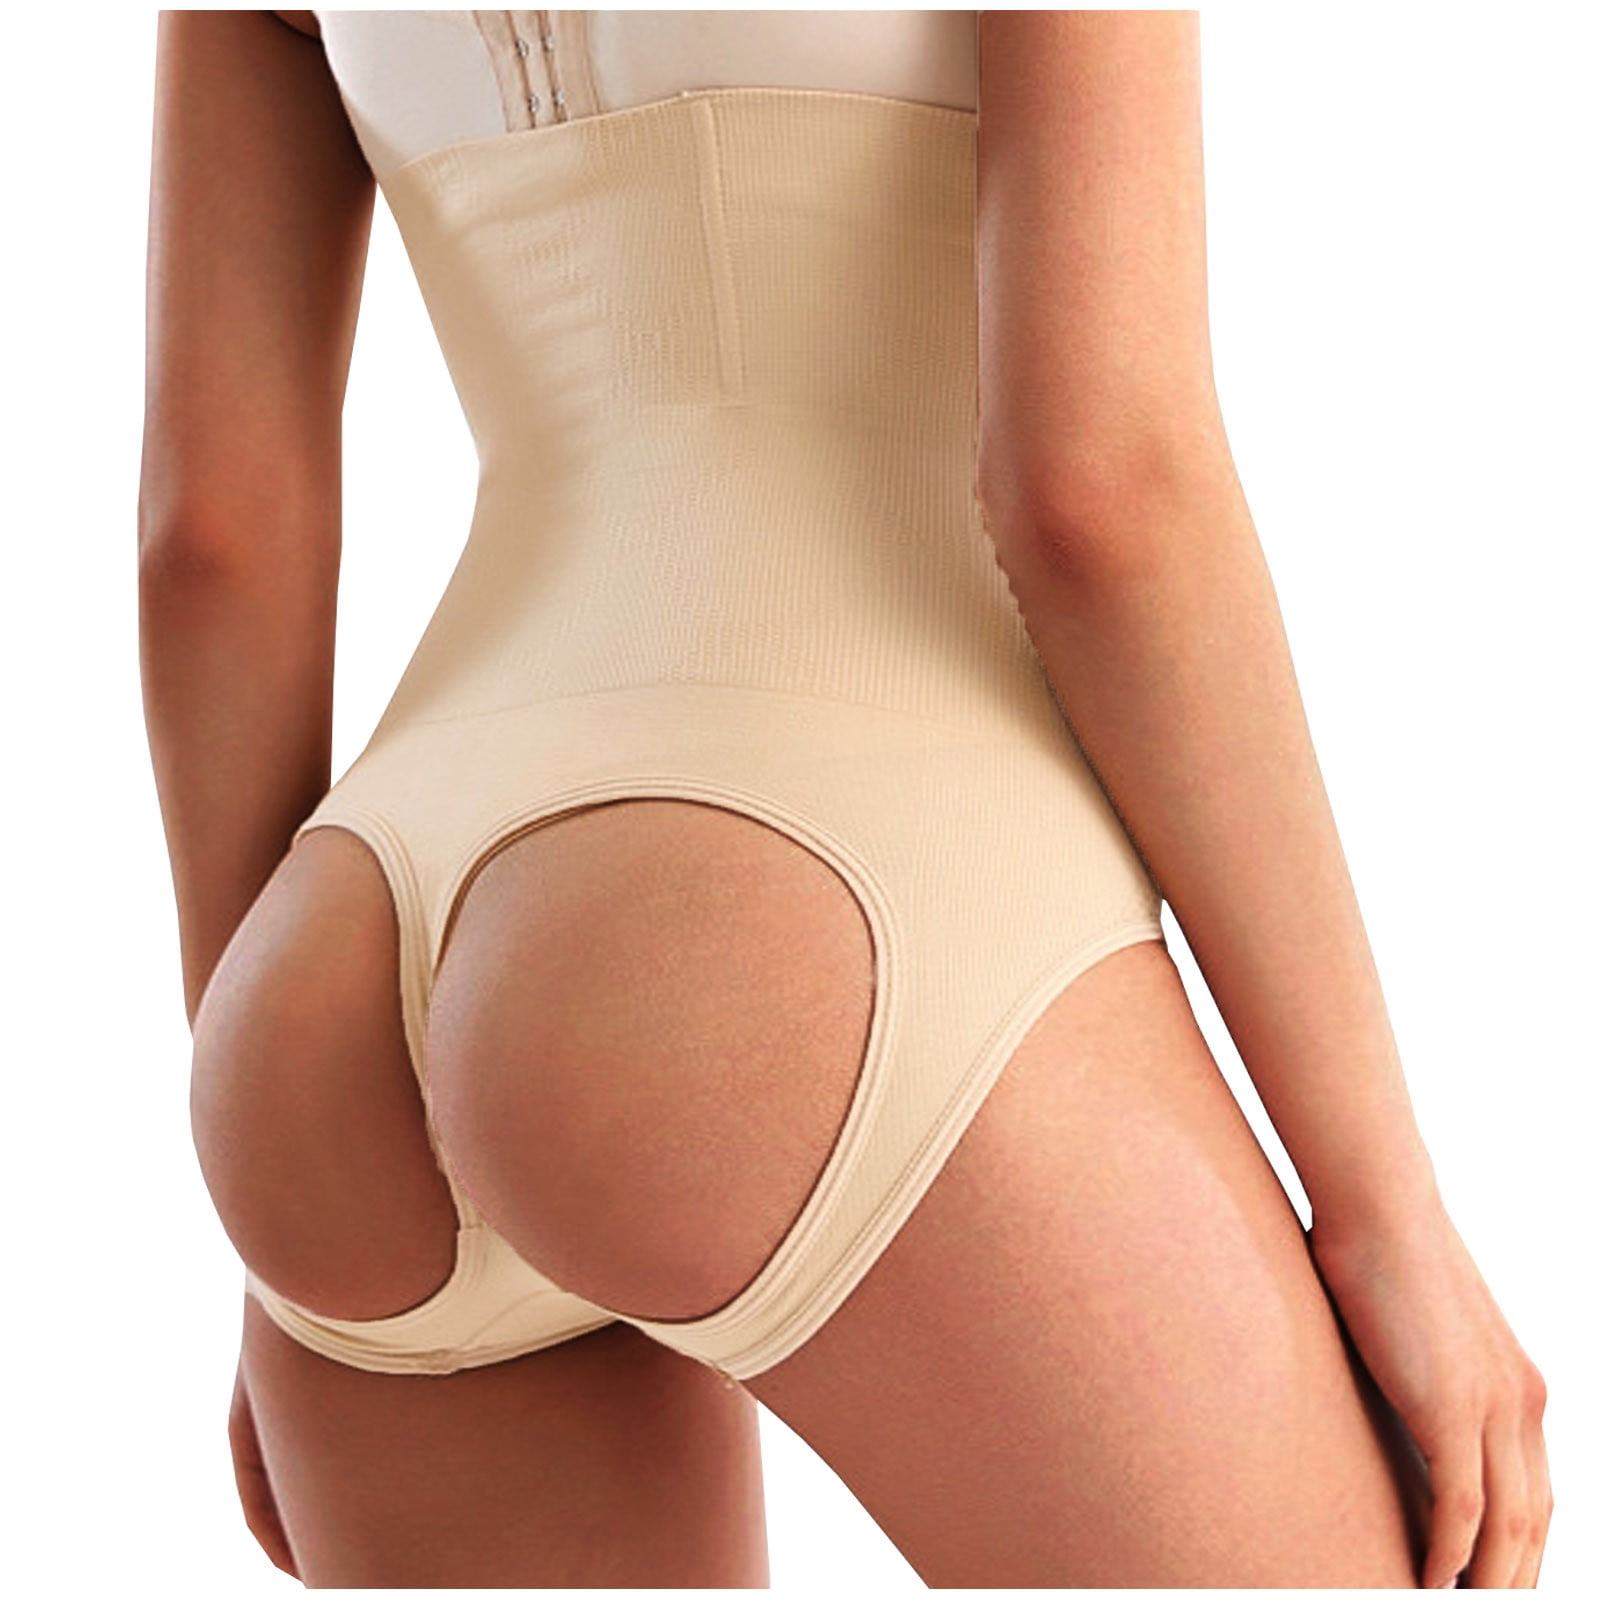 Salome 0218 Fajas Colombianas Reductoras Butt Lift Underwear